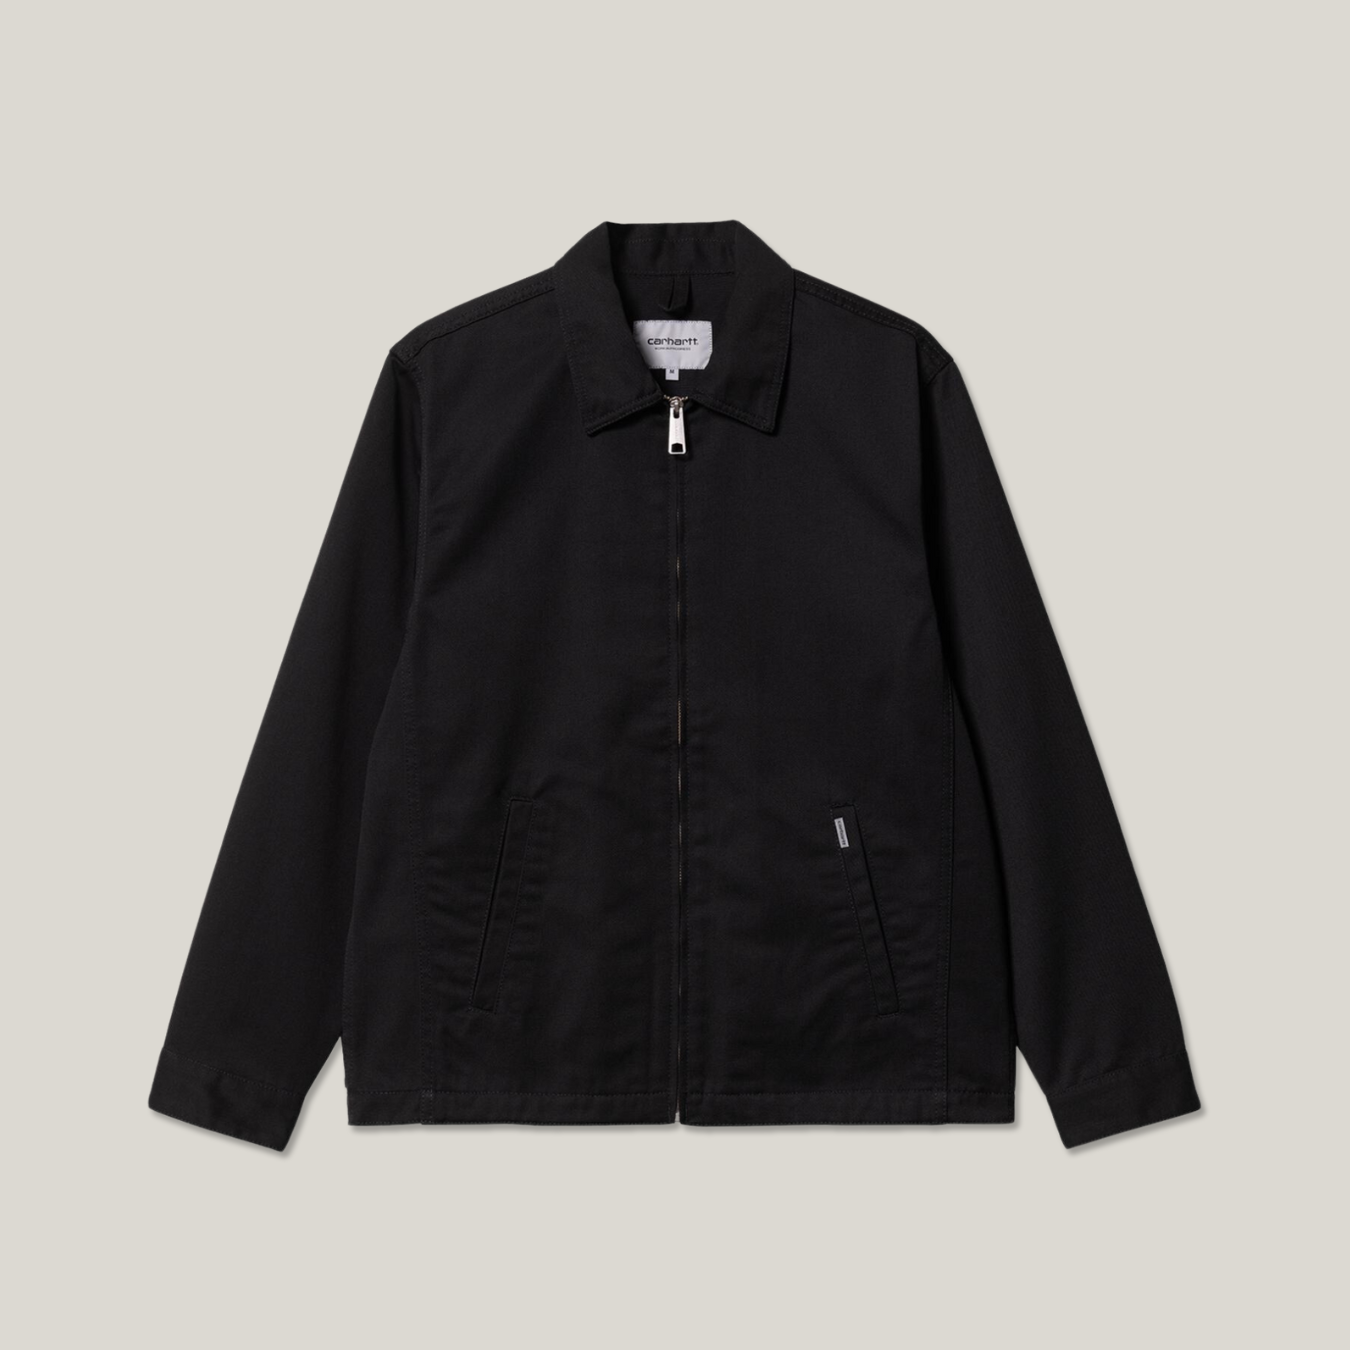 Load image into Gallery viewer, Carhartt Modular Jacket - Black
